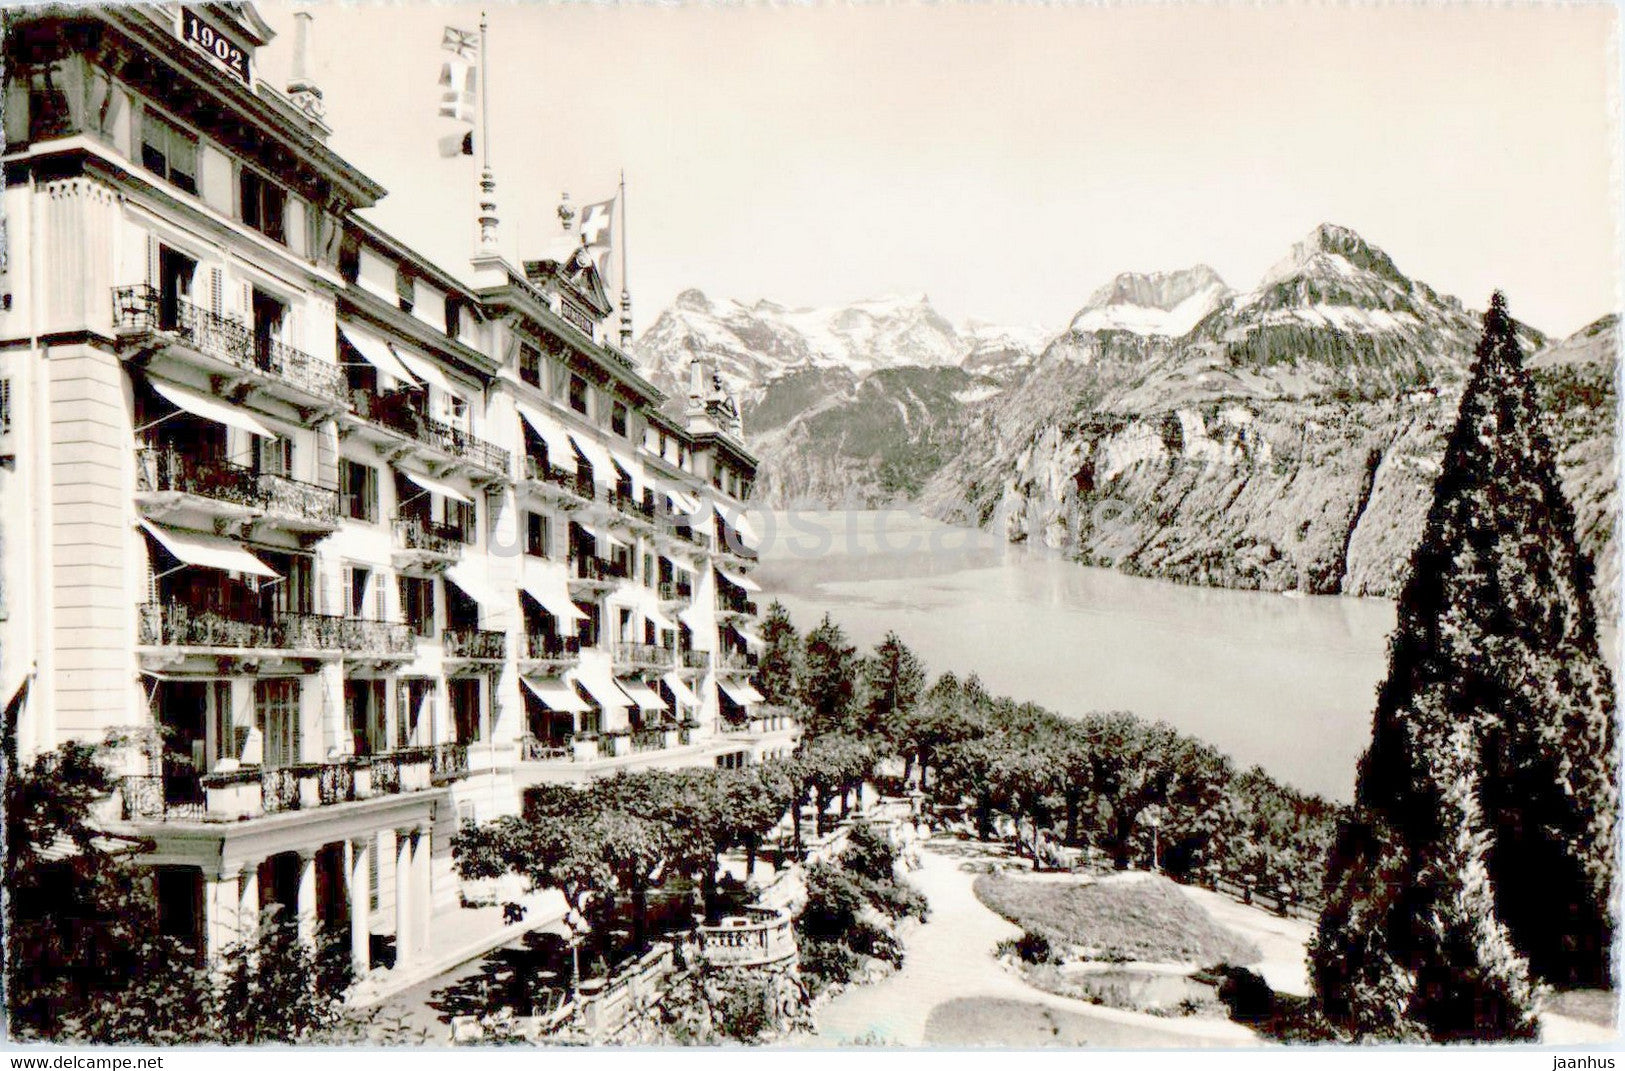 Axenstein - Grand Hotel - Blick gegen Urirotstock - Ober und Niederbauen - 1952 - old postcard - Switzerland - used - JH Postcards